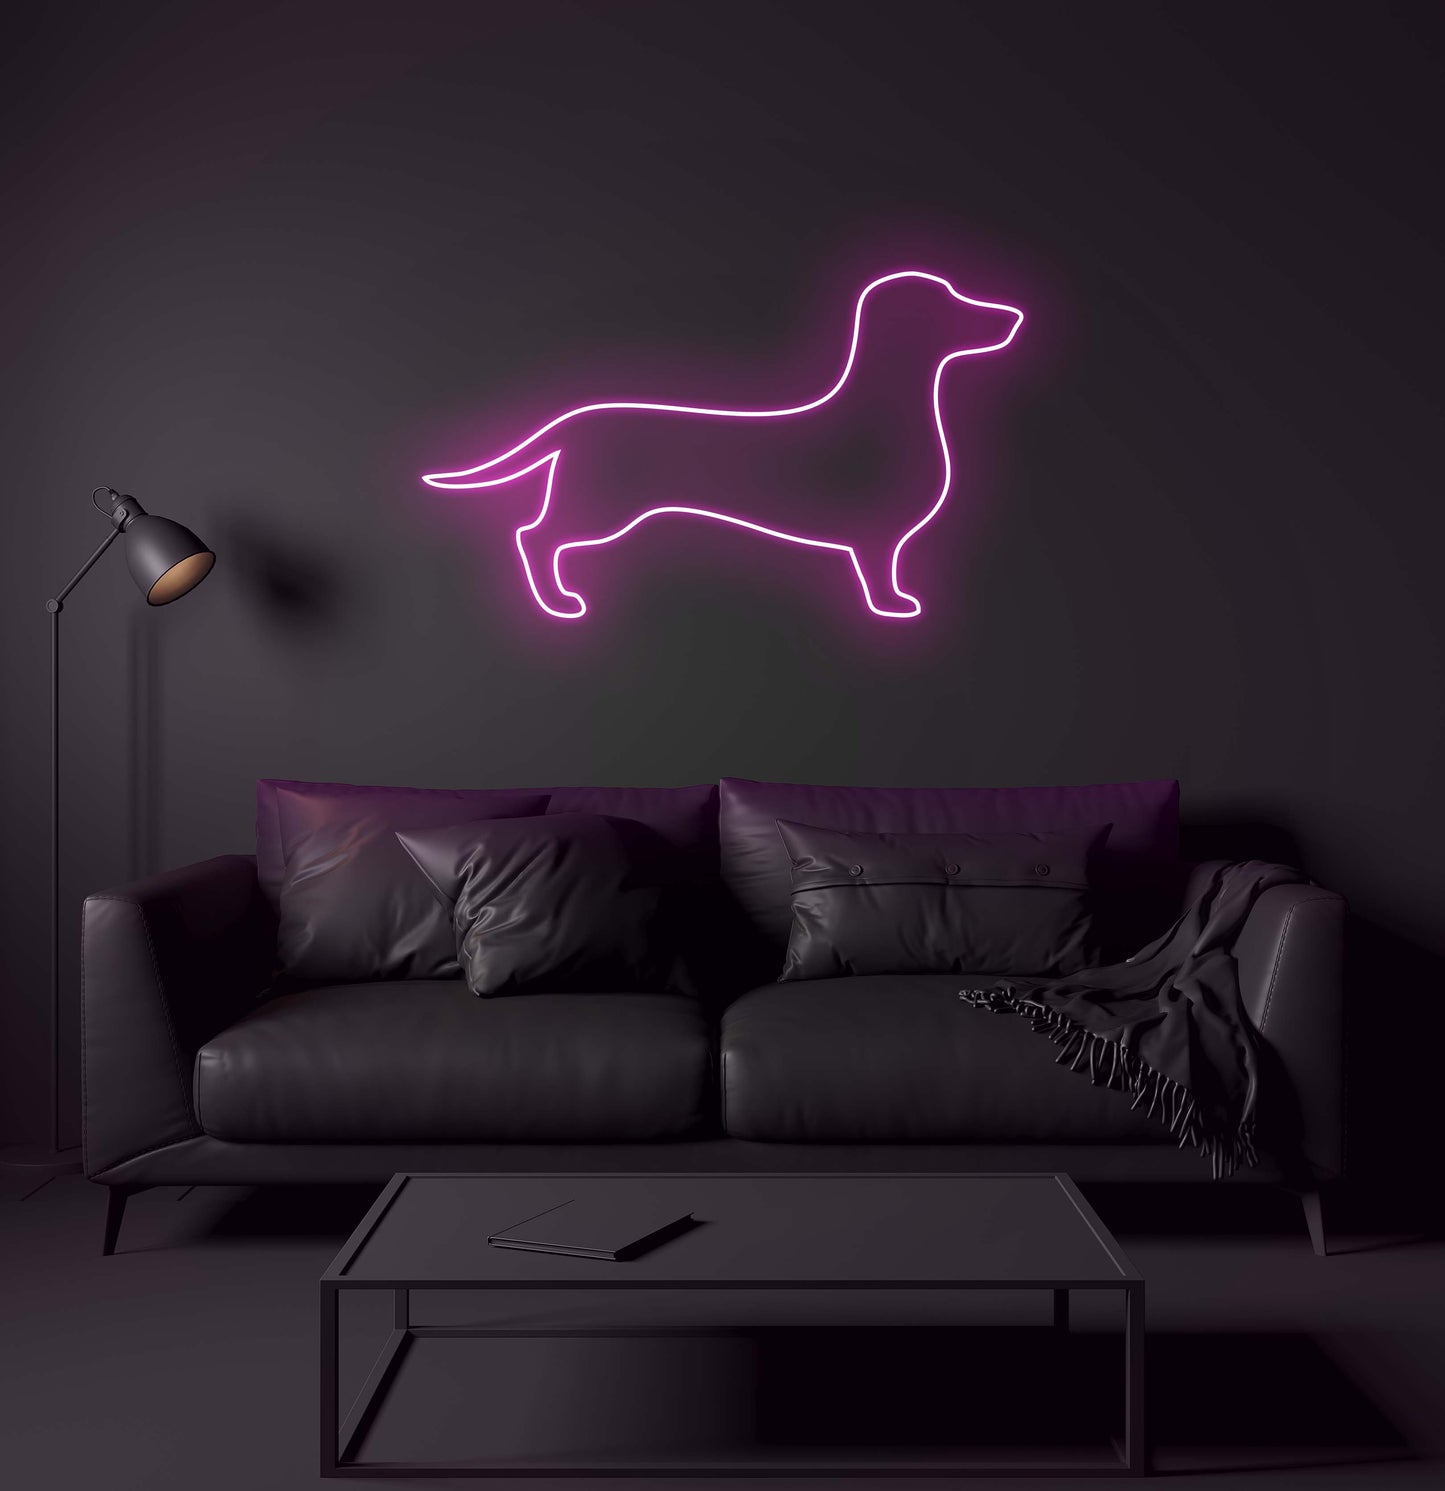 Dachshund (Sausage Dog) LED Neon Sign